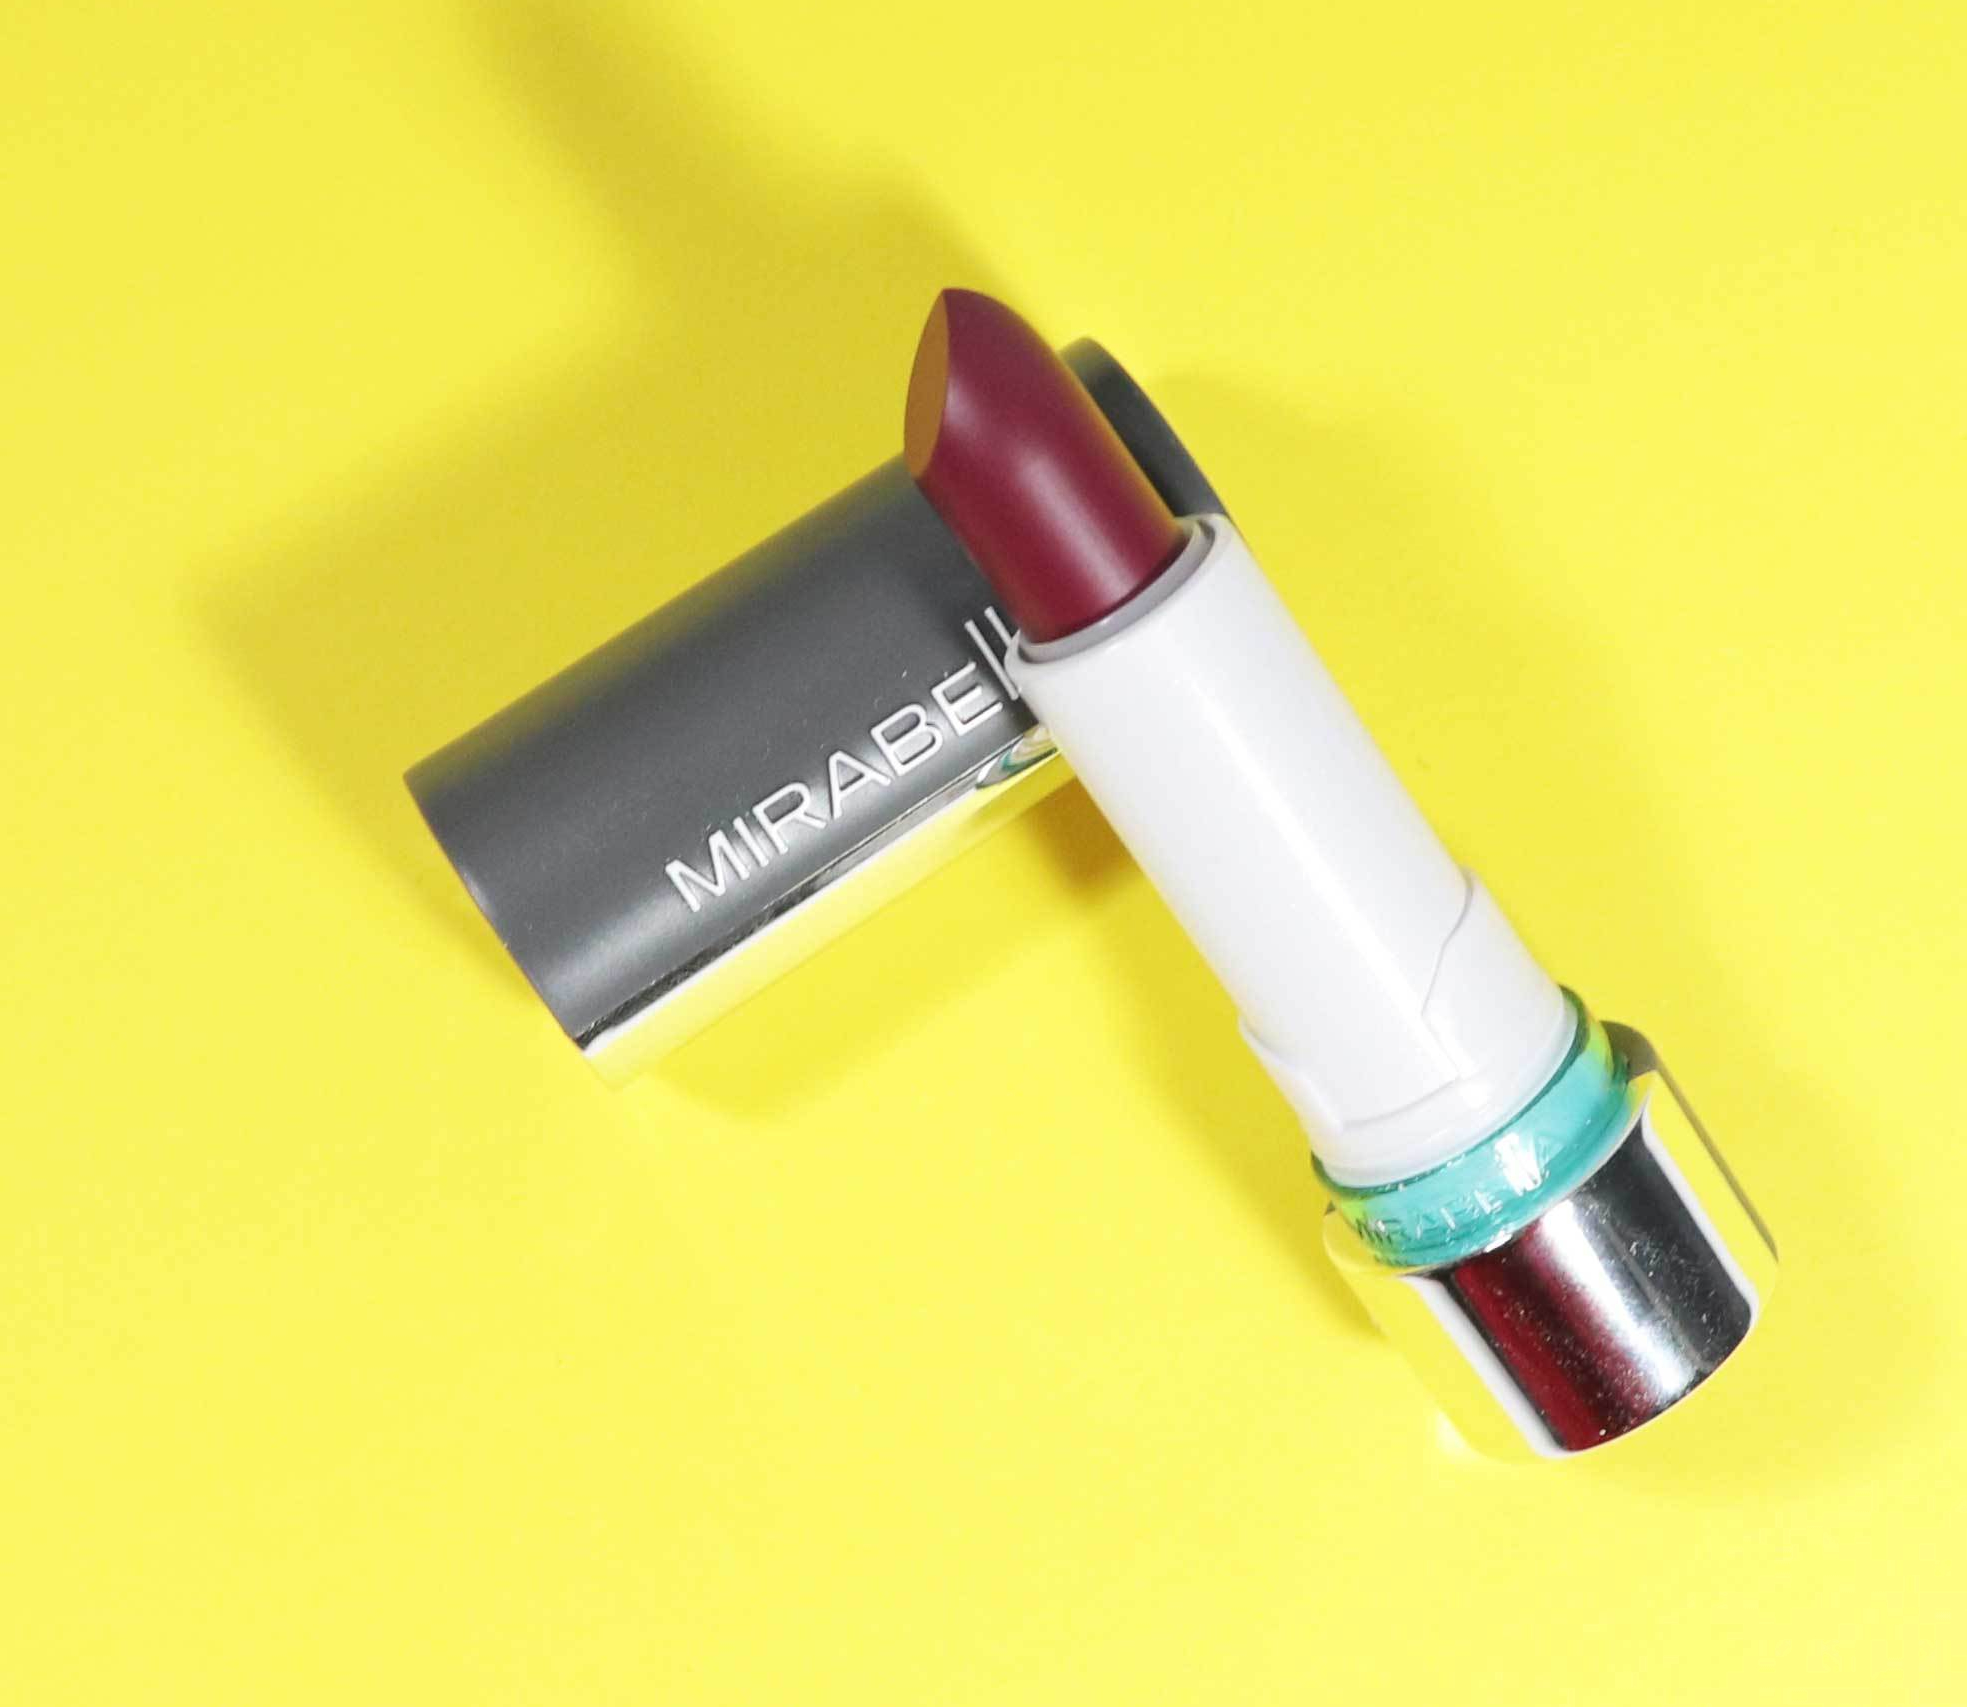 Mirabella Colour Vinyl Lipstick